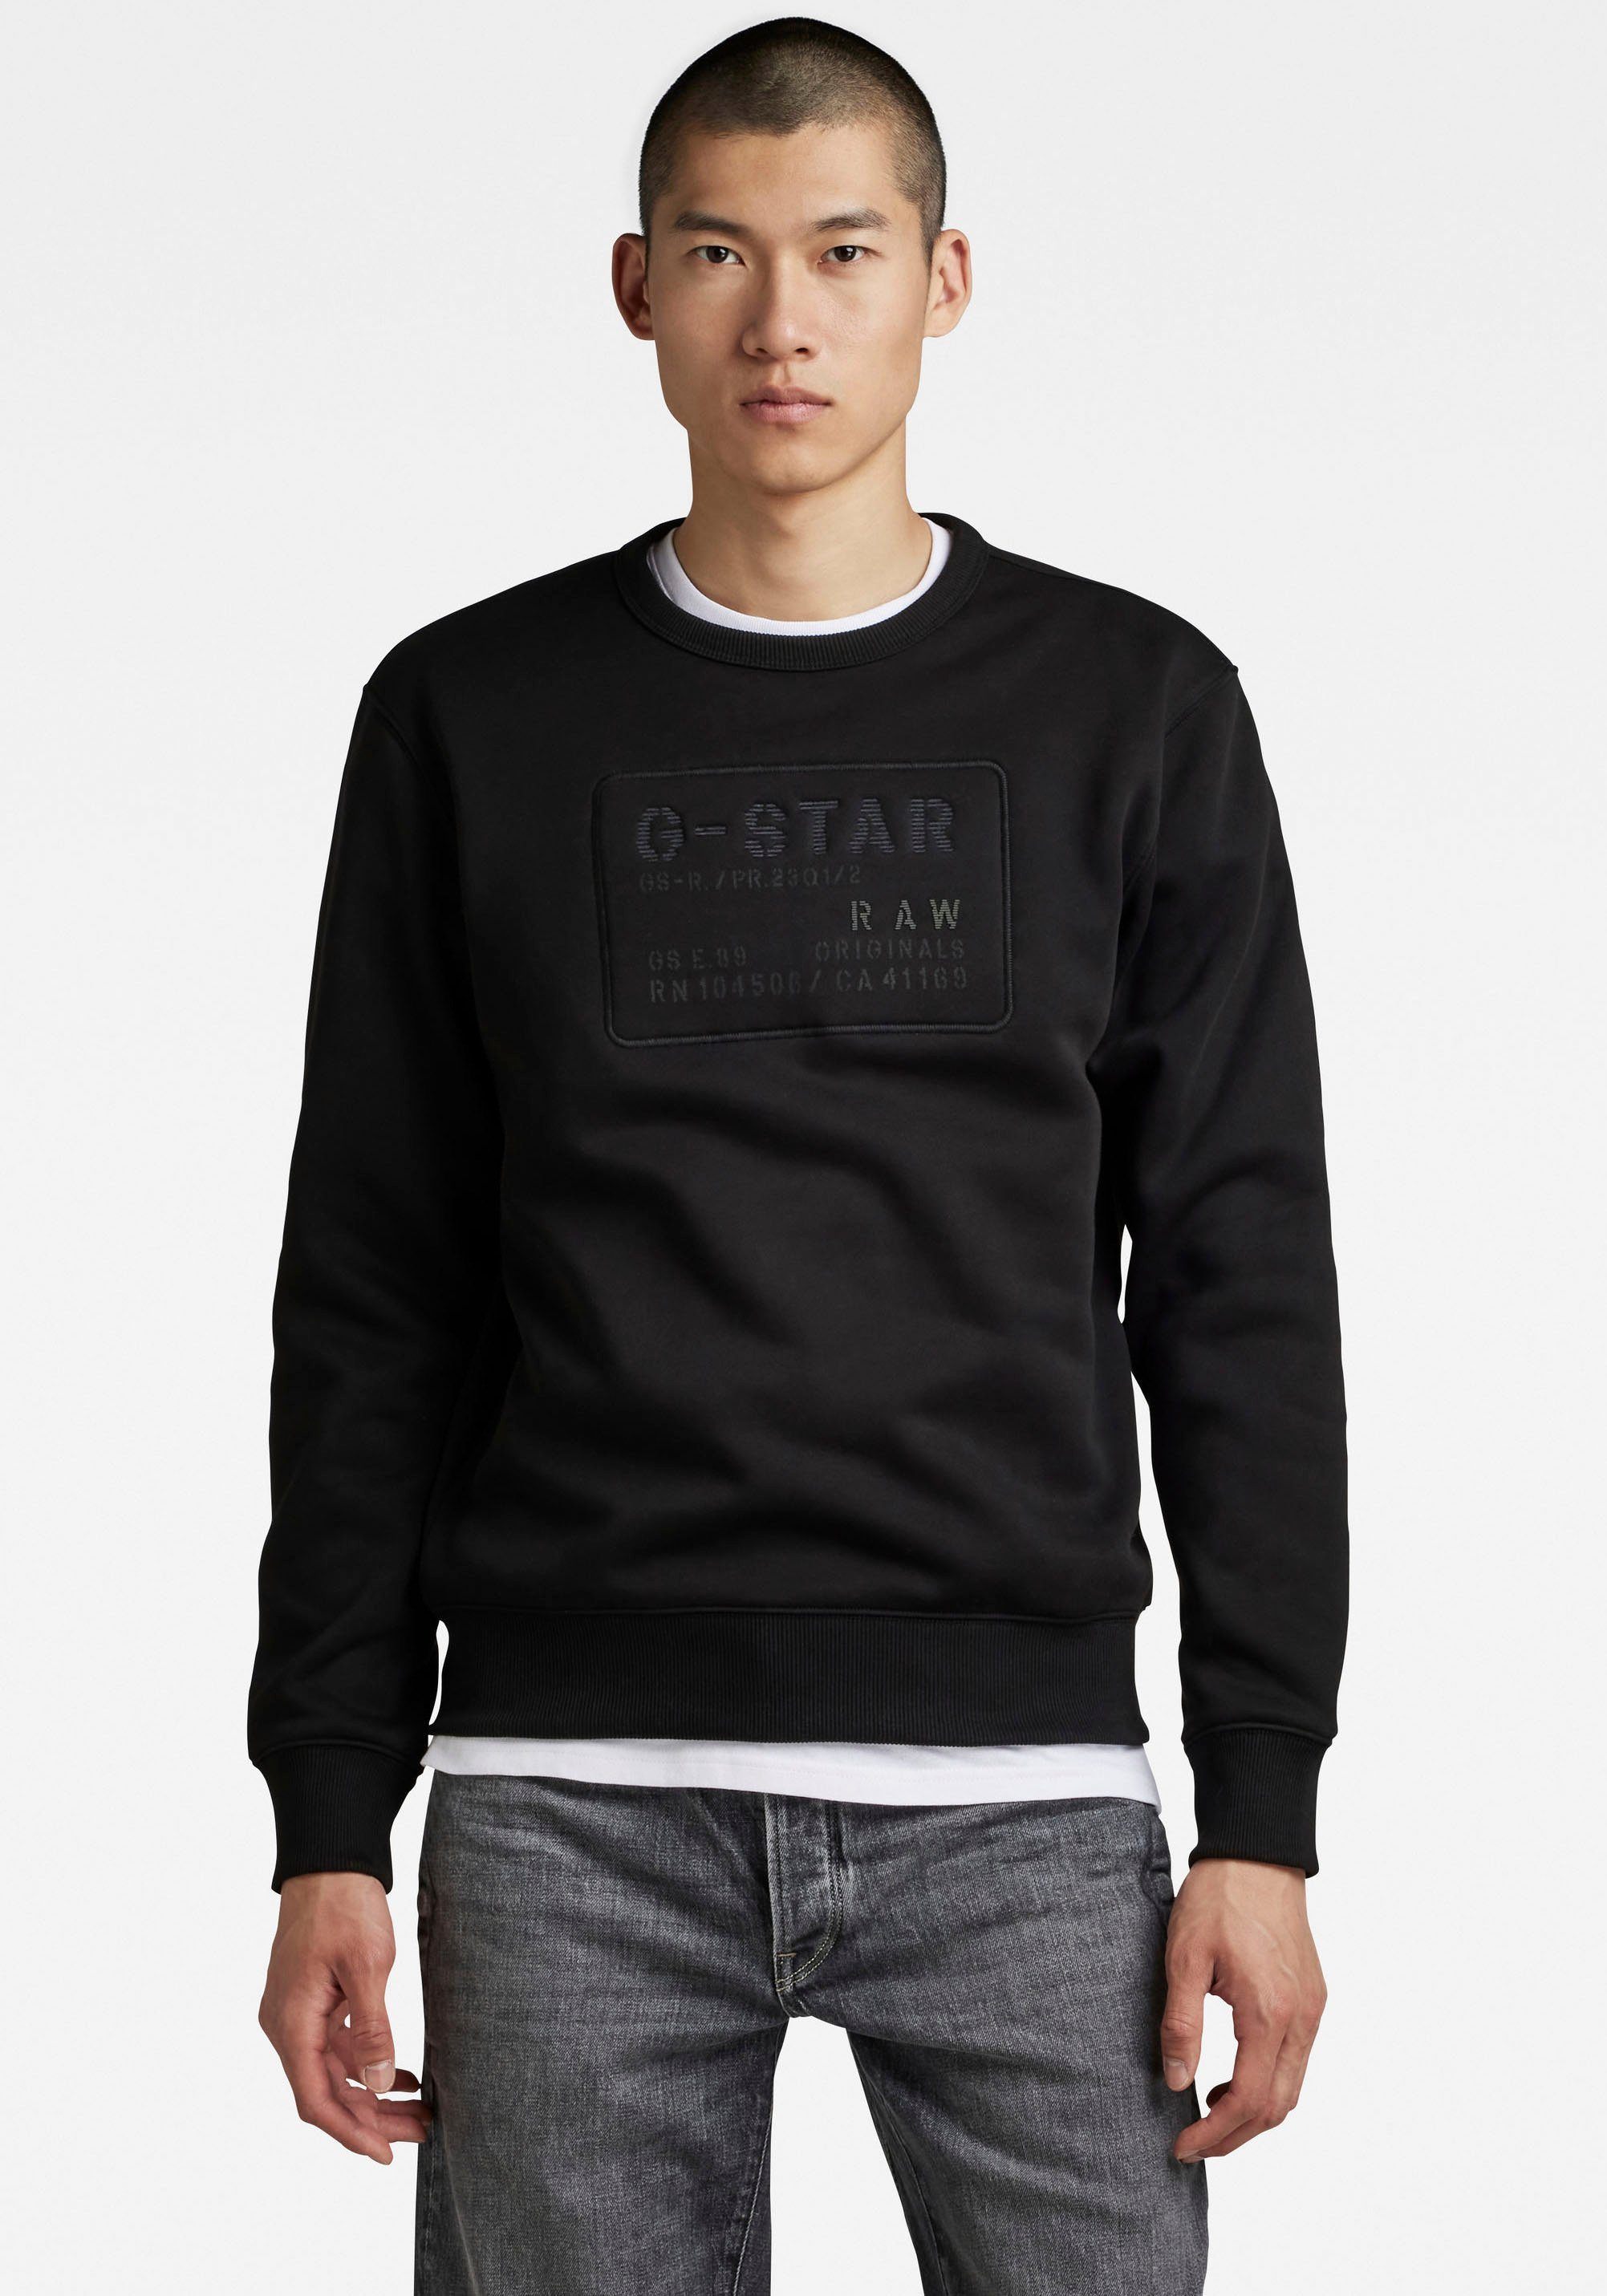 G-Star RAW Sweatshirt Sweatshirt Originals Dark black | Sweatshirts